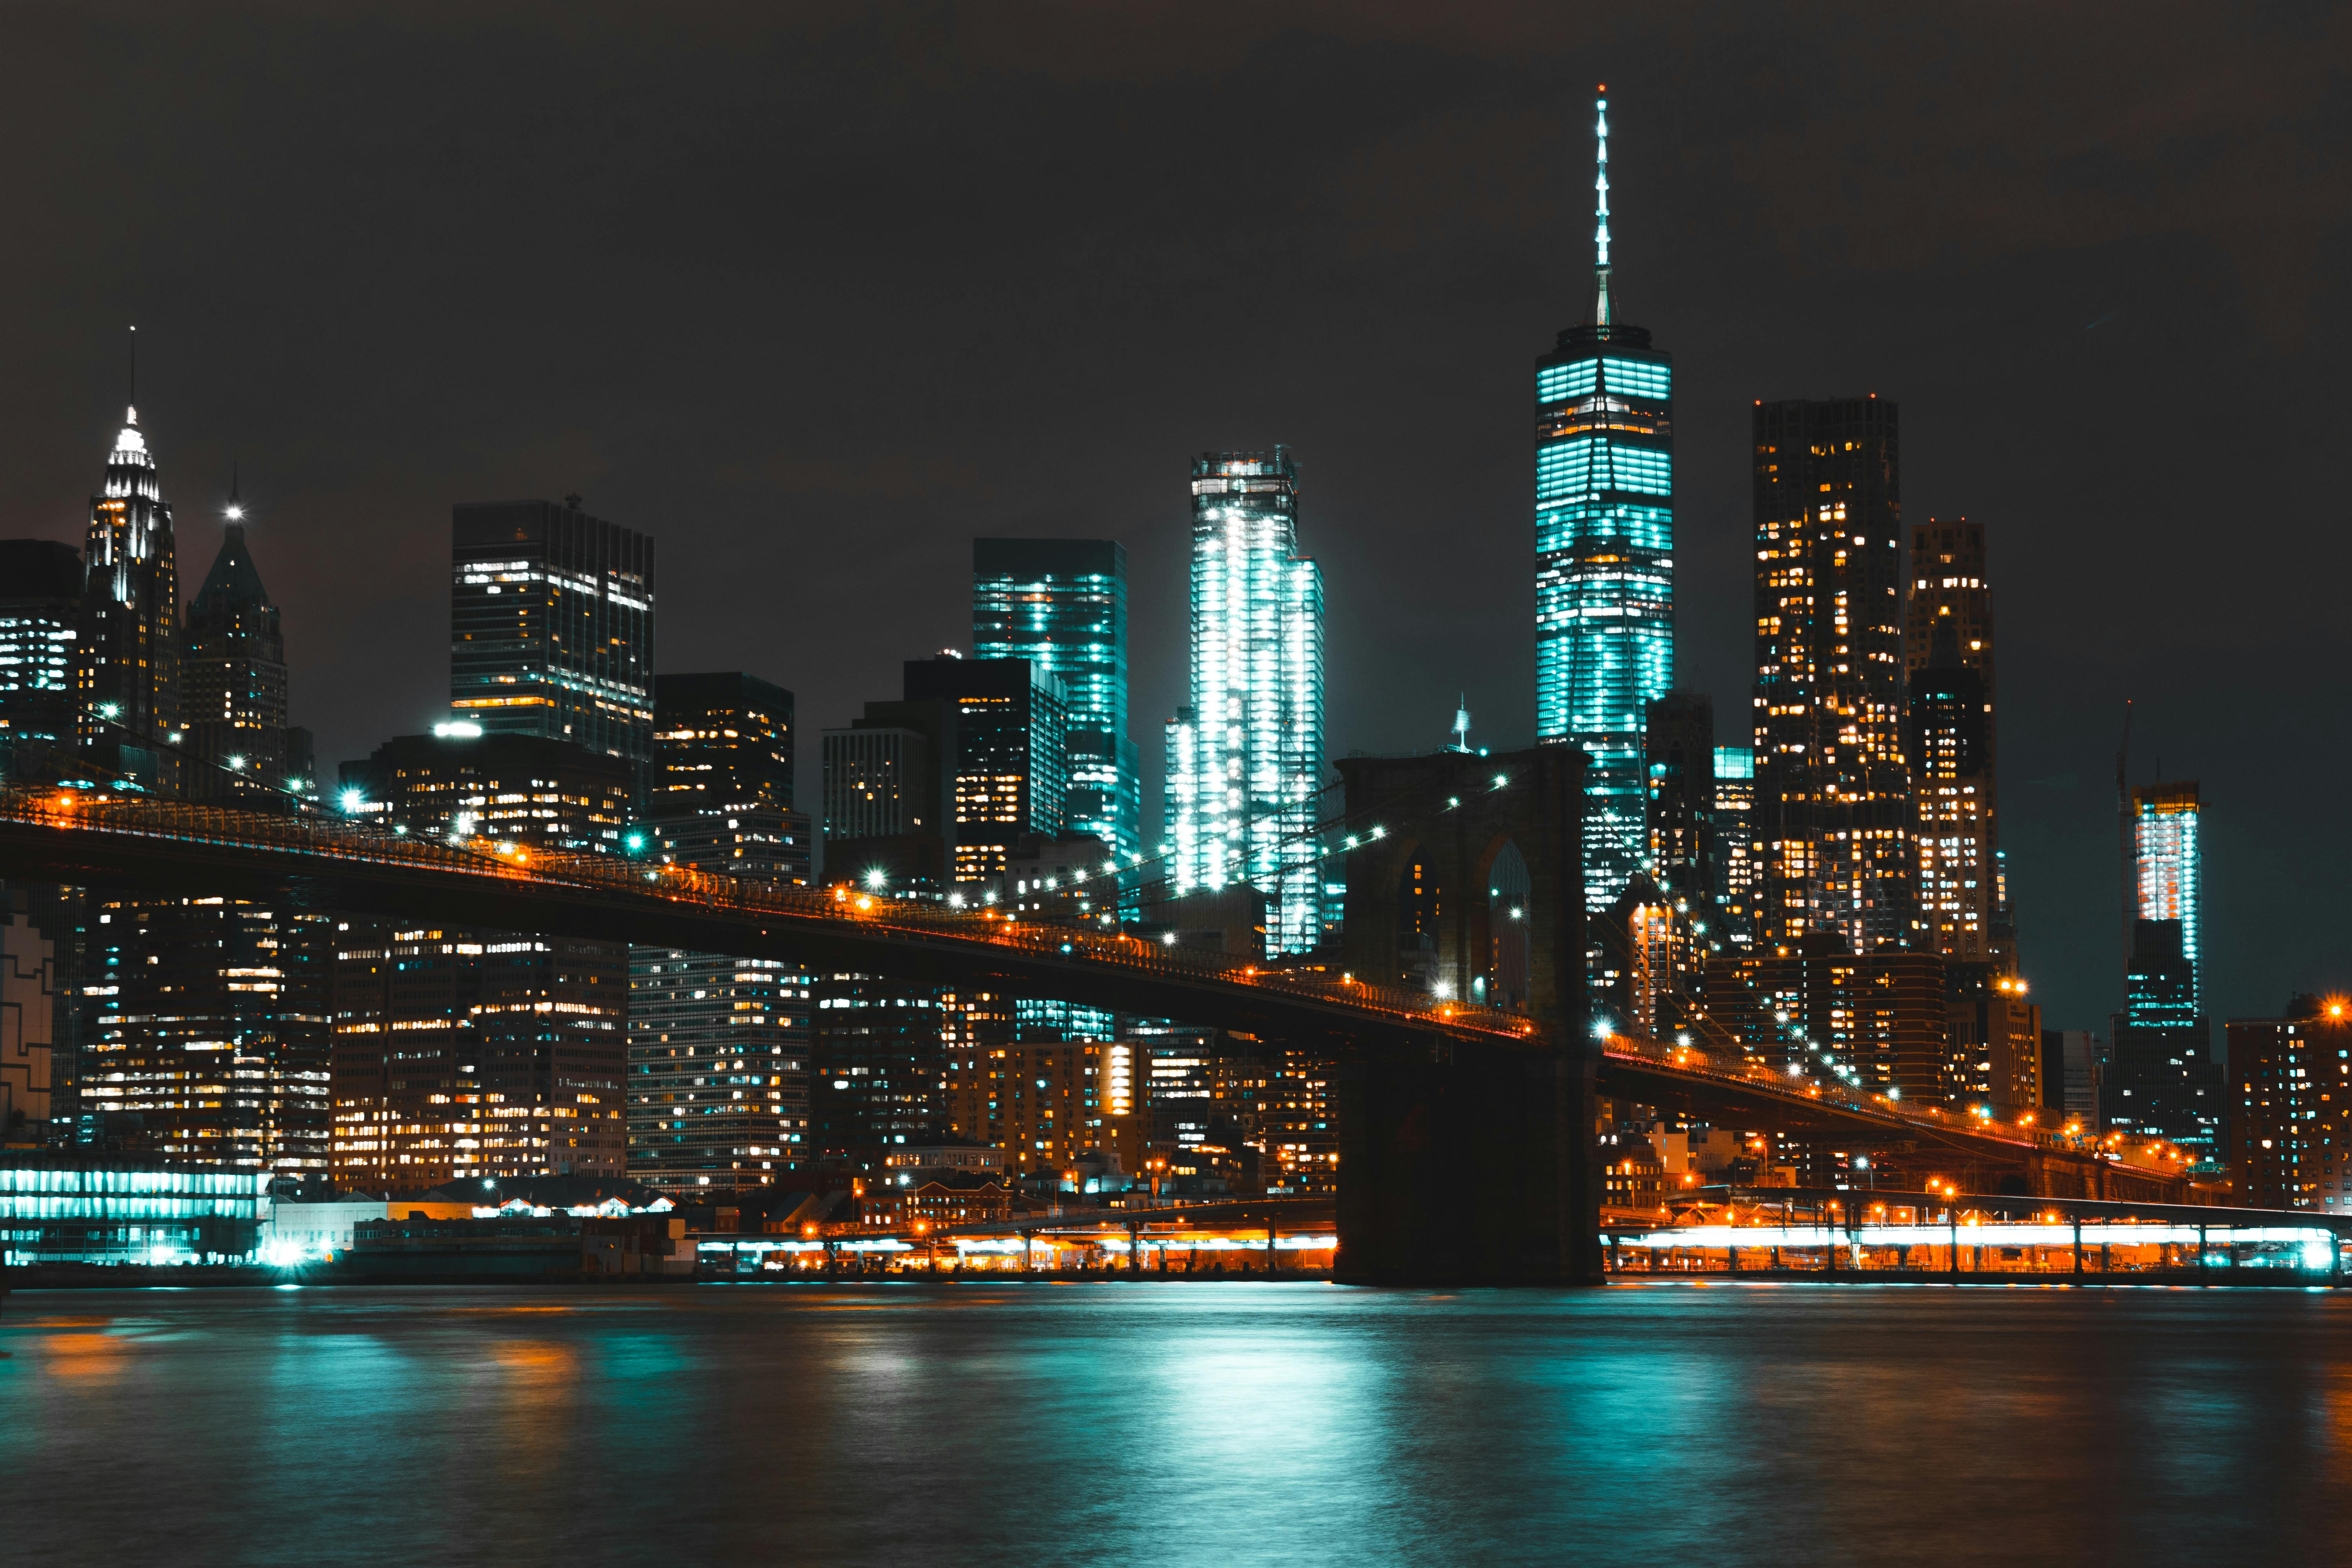 lighted brooklyn bridge during nighttime